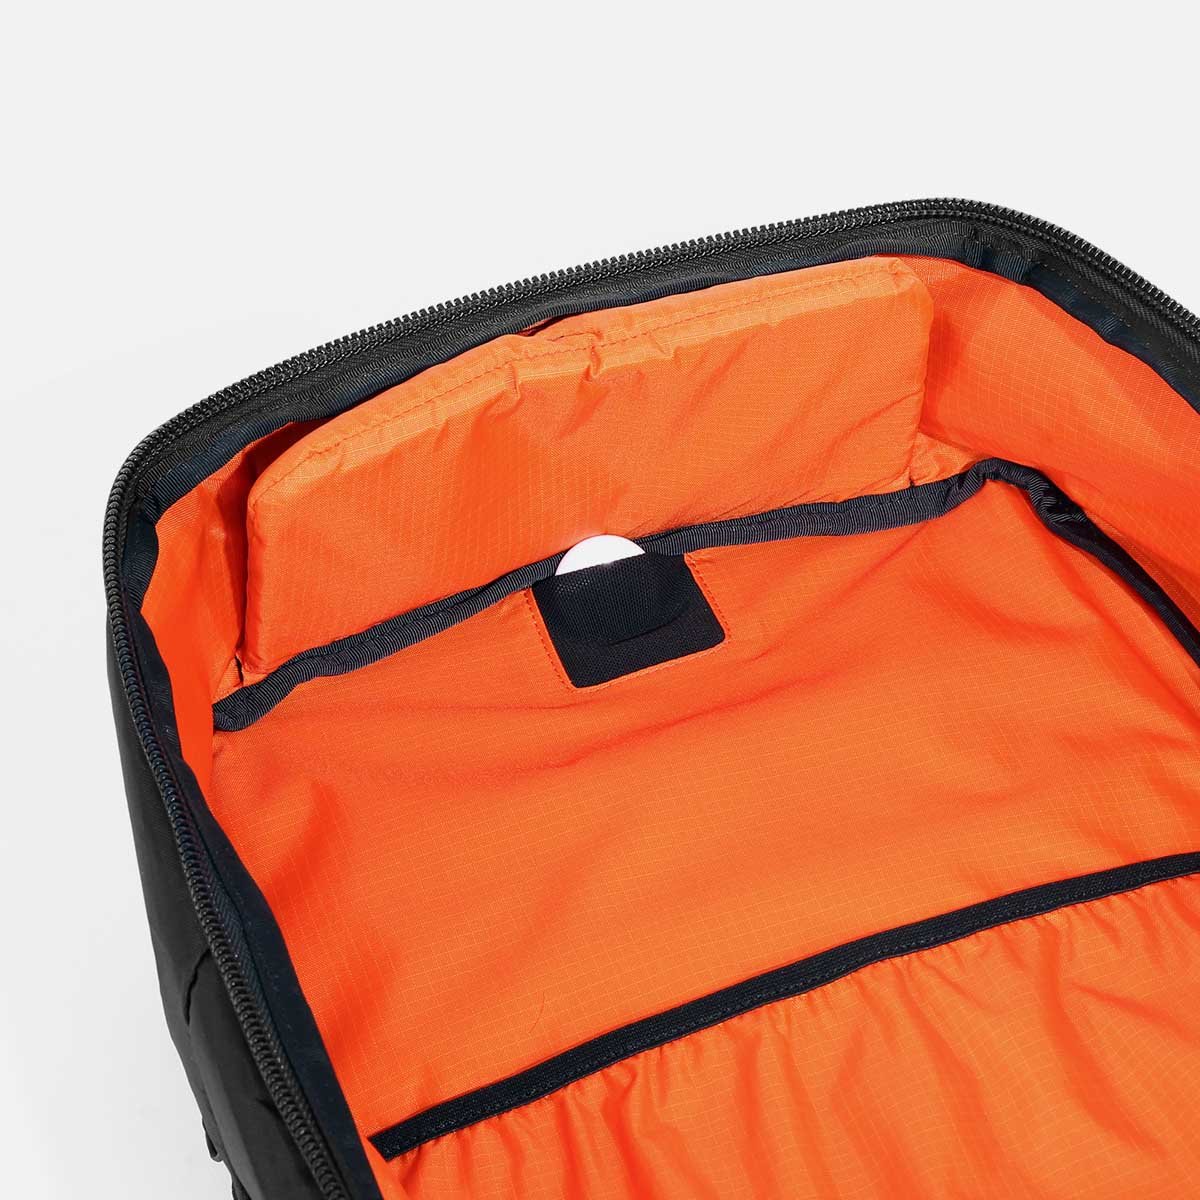 City Pack Pro X-Pac - Black — Aer | Modern gym bags, travel backpacks ...